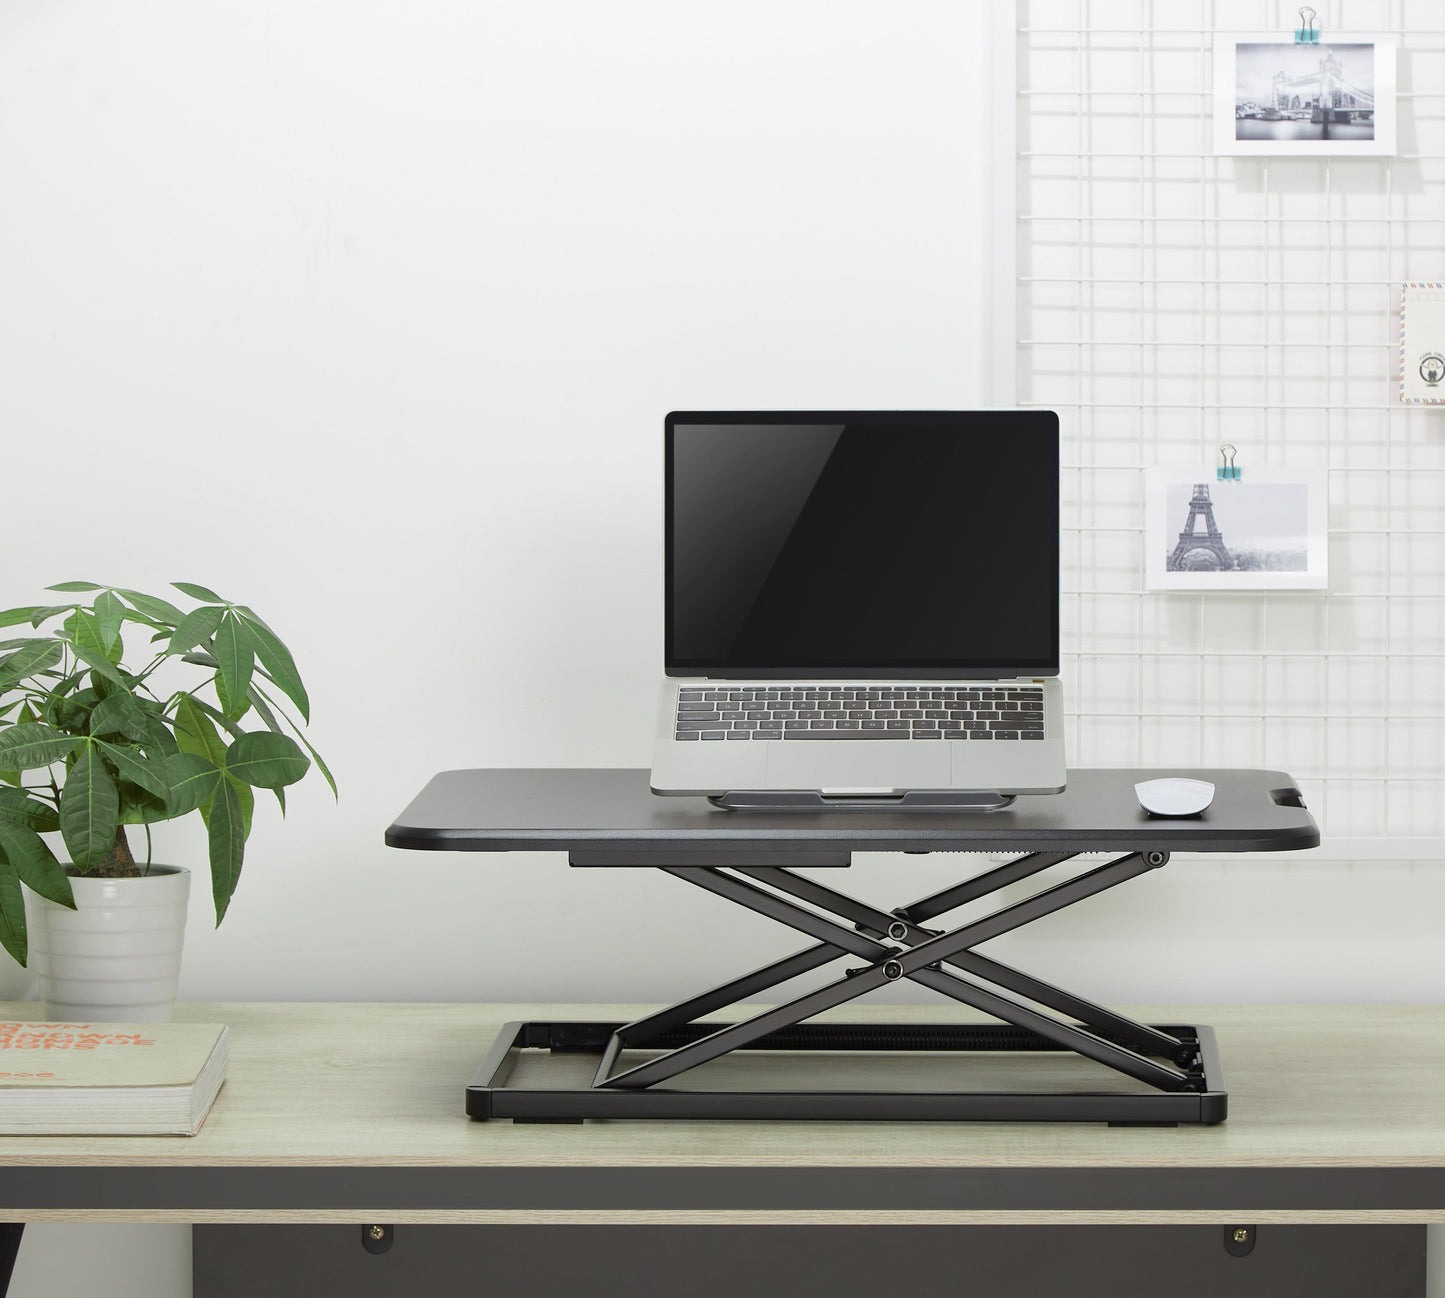 ProperAV Slim Profile Adjustable Stand Up Desk Workstation with 6 Height Settings - Black - maplin.co.uk